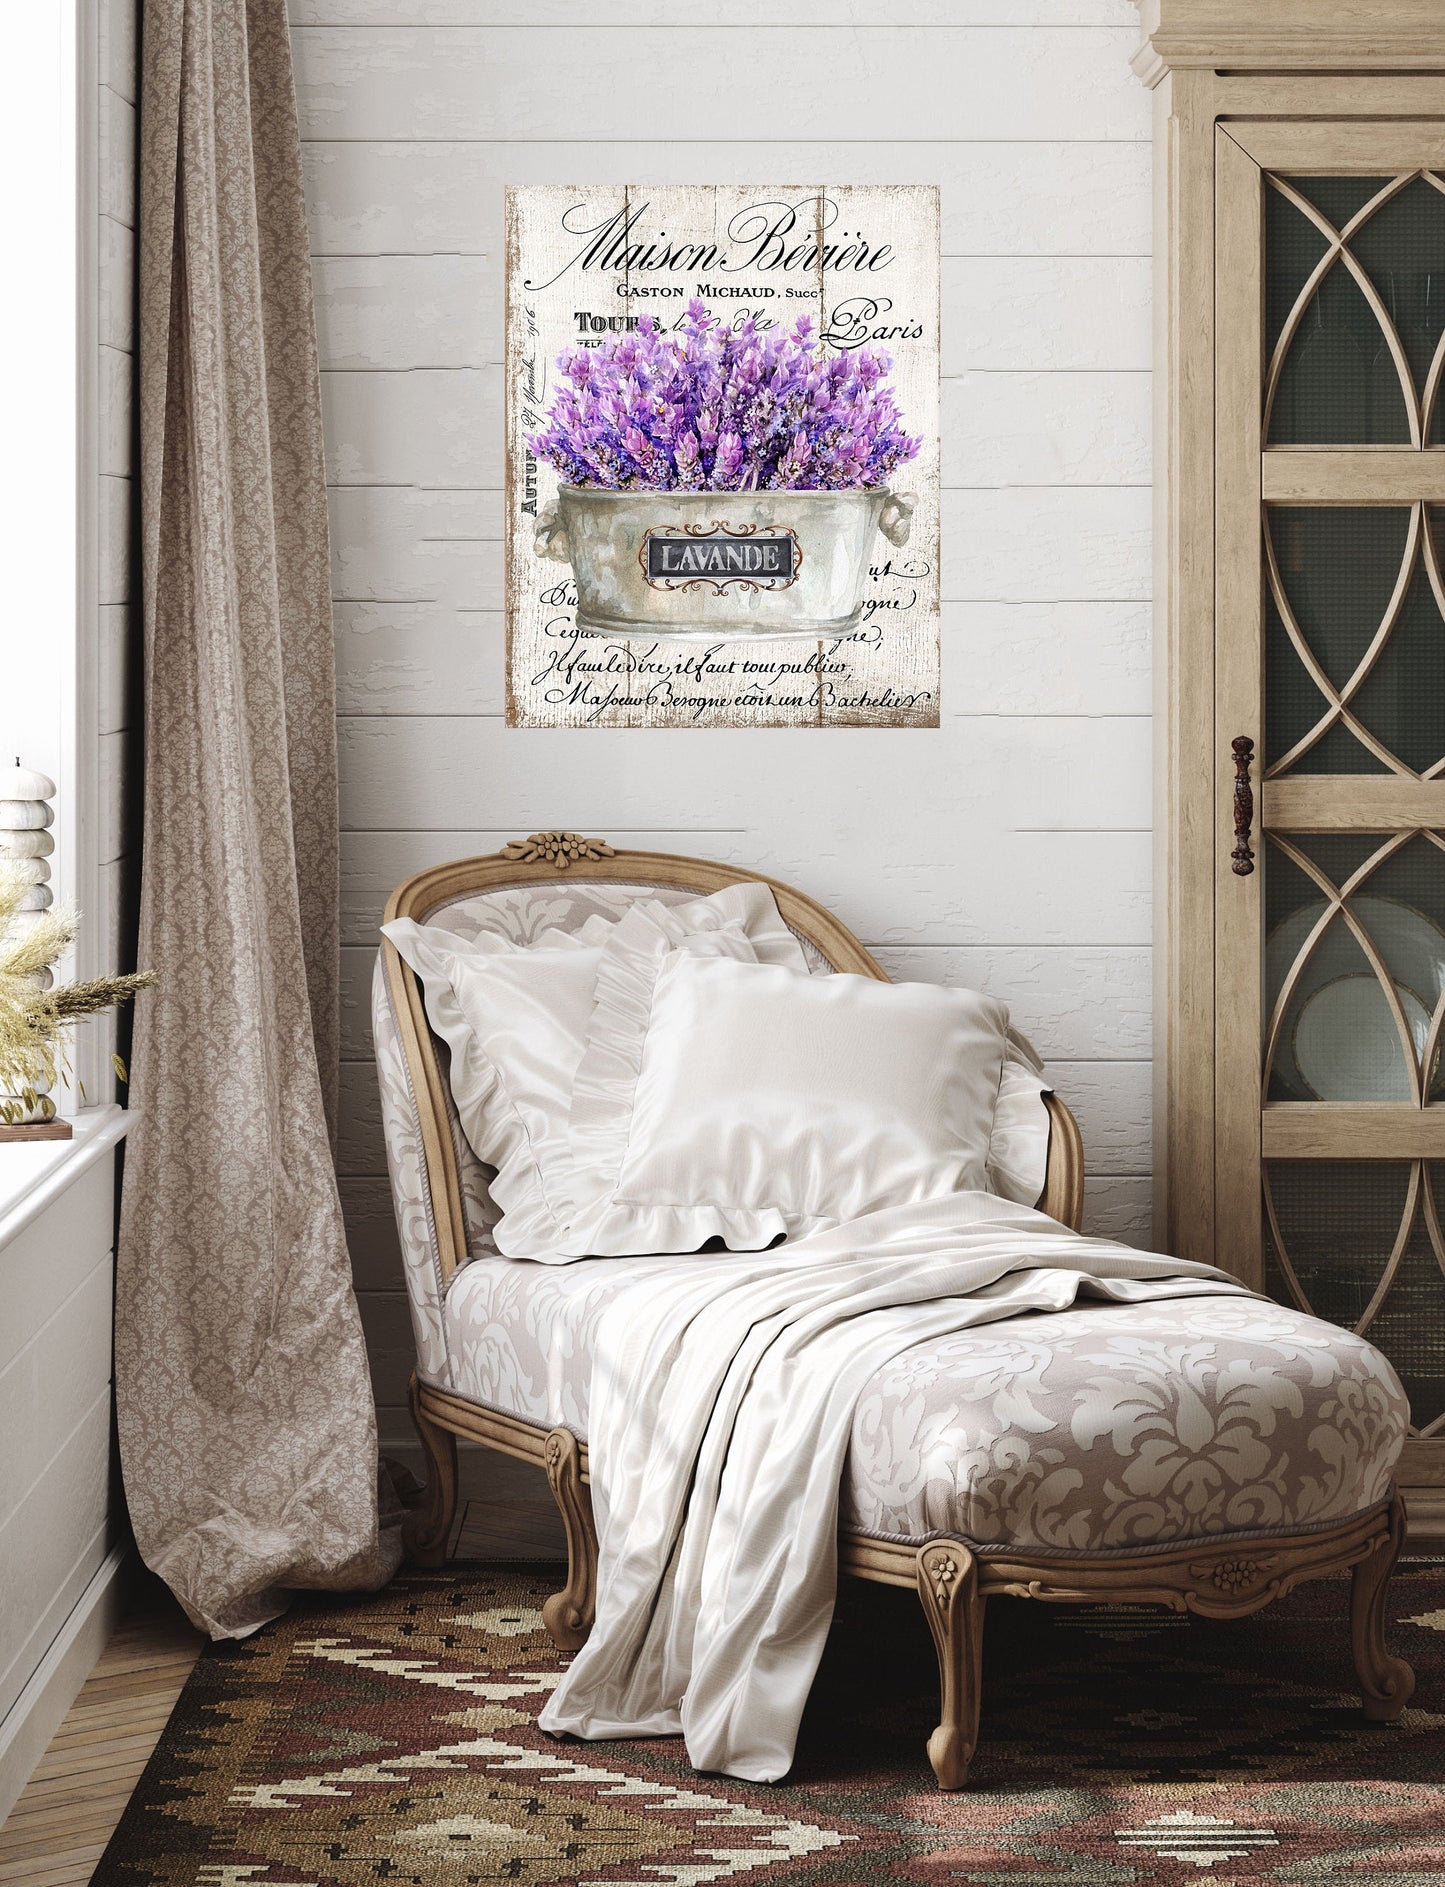 16x20 French Lavender Wall Art Canvas Print